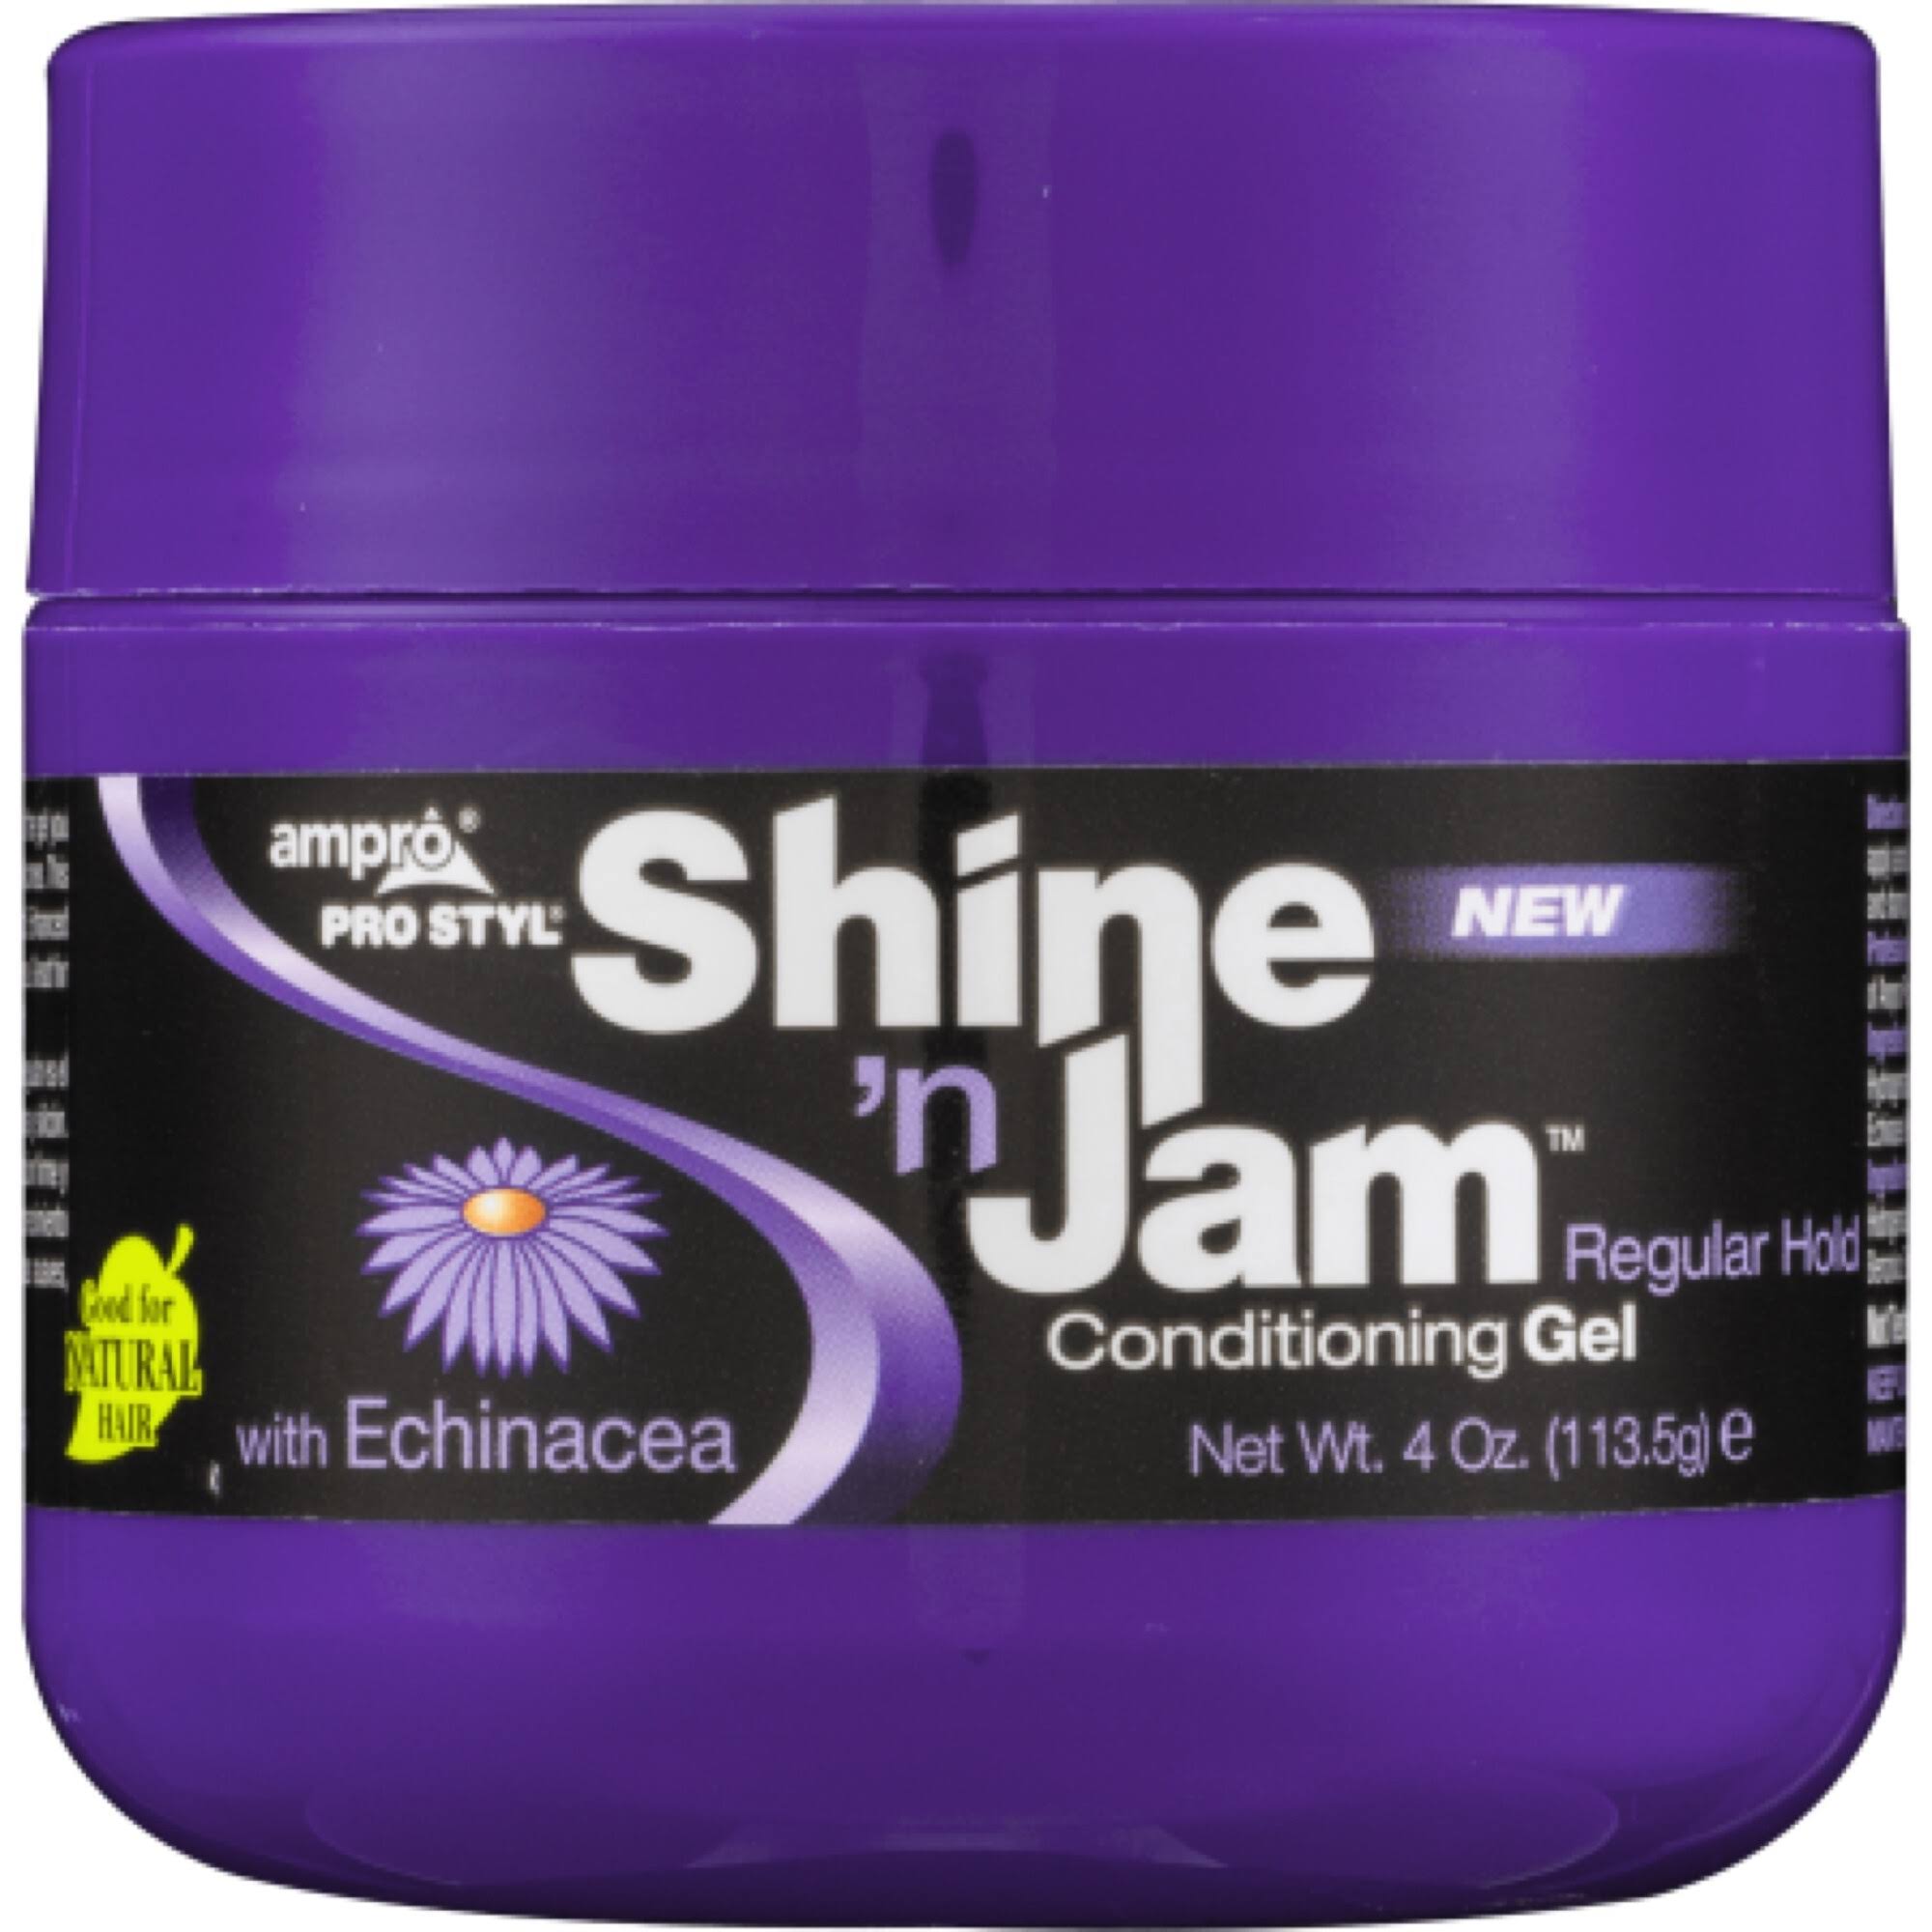 Ampro Pro Styl Shine 'N Jam Conditioning Gel With Echinacea - 113.5g